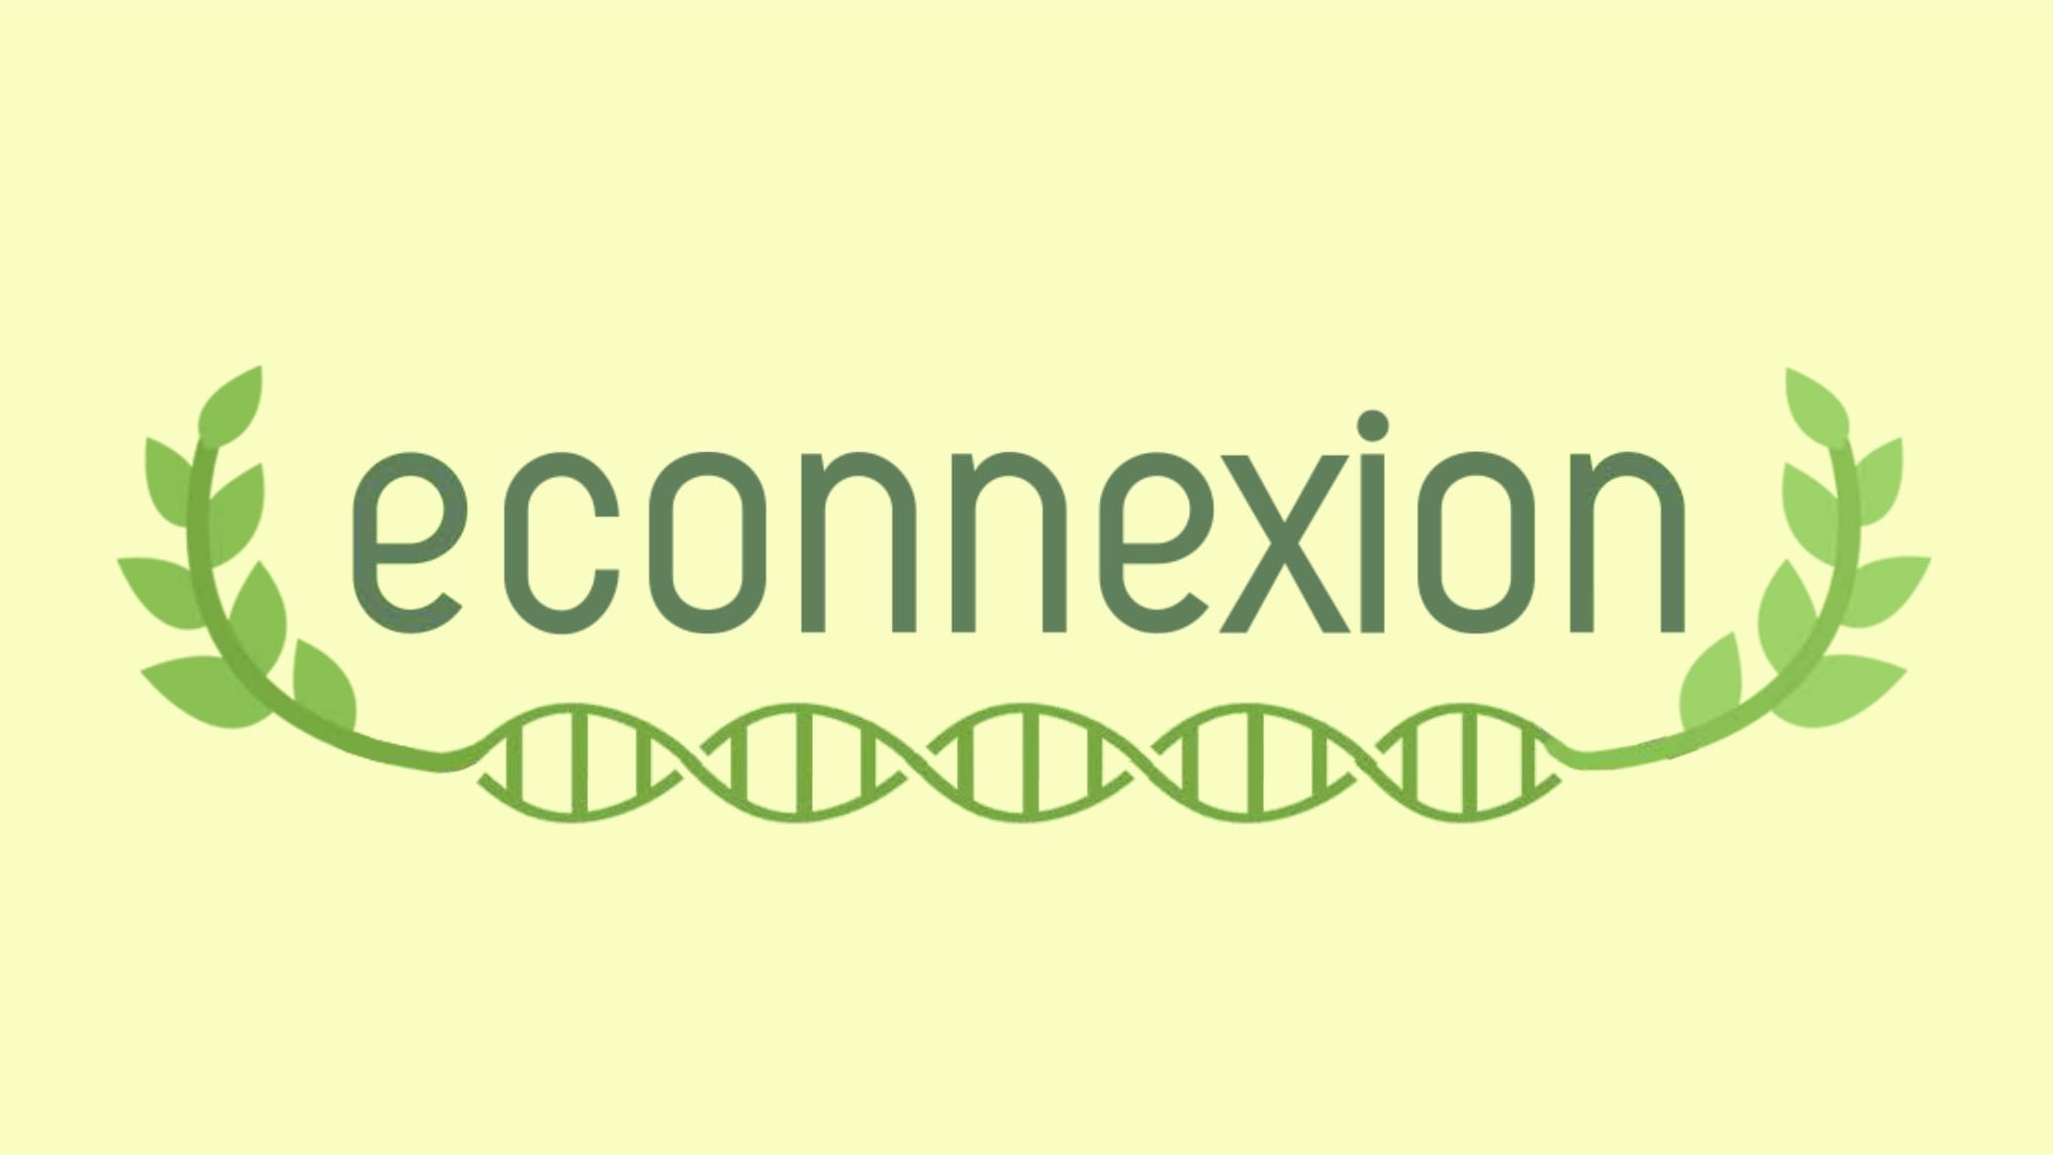 Econnexion_1-1.jpg